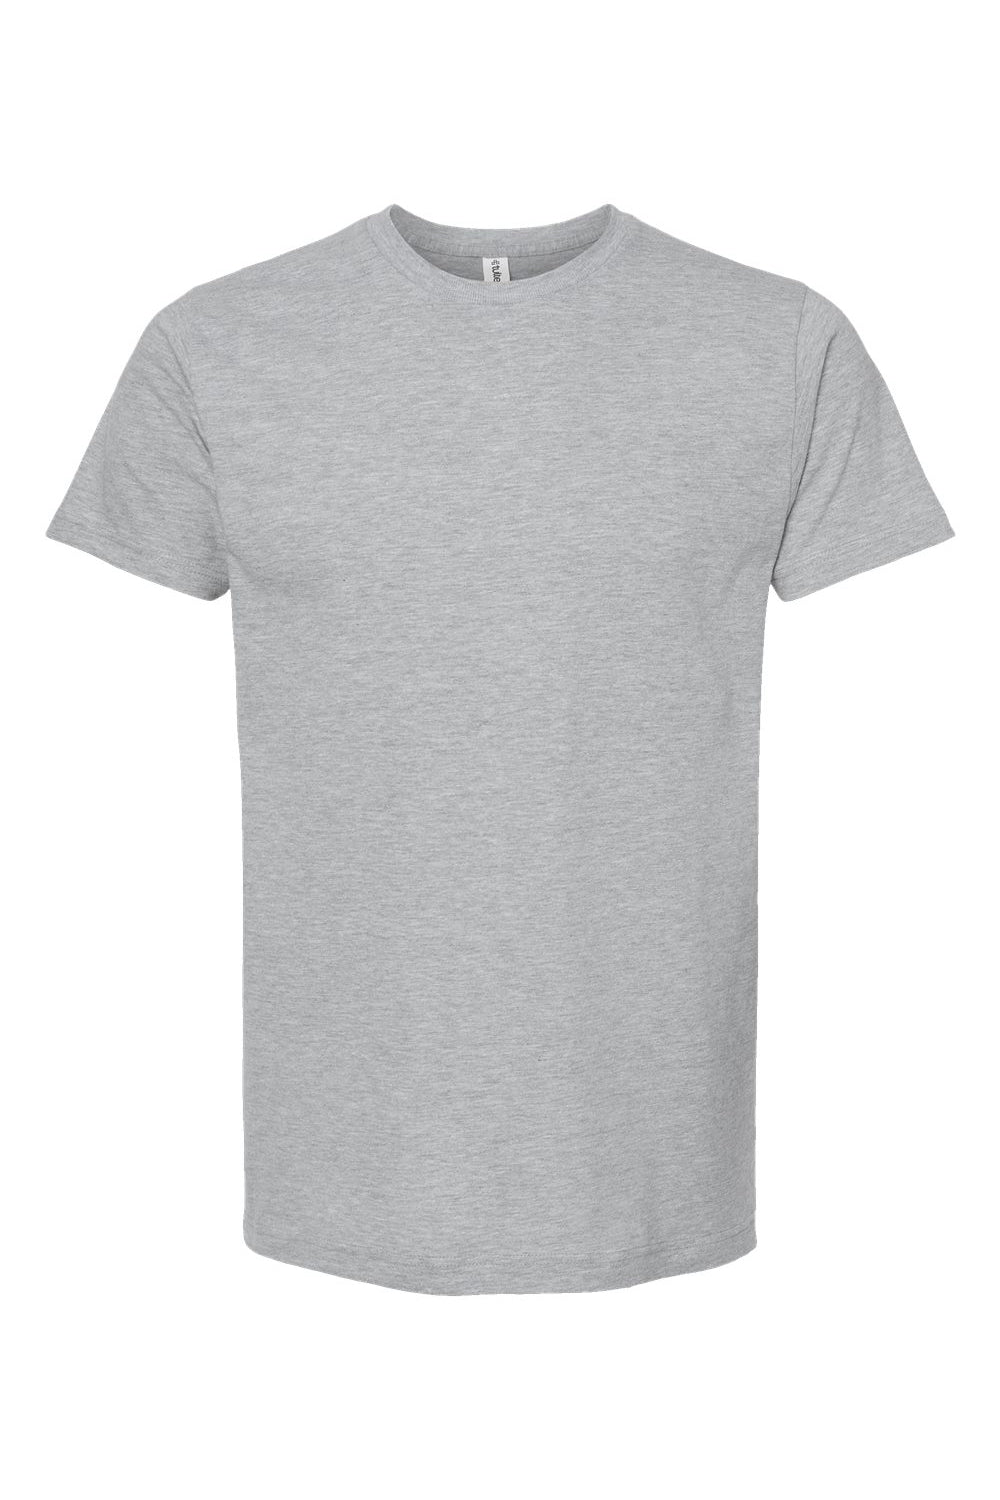 Tultex 202 Mens Fine Jersey Short Sleeve Crewneck T-Shirt Heather Grey Flat Front